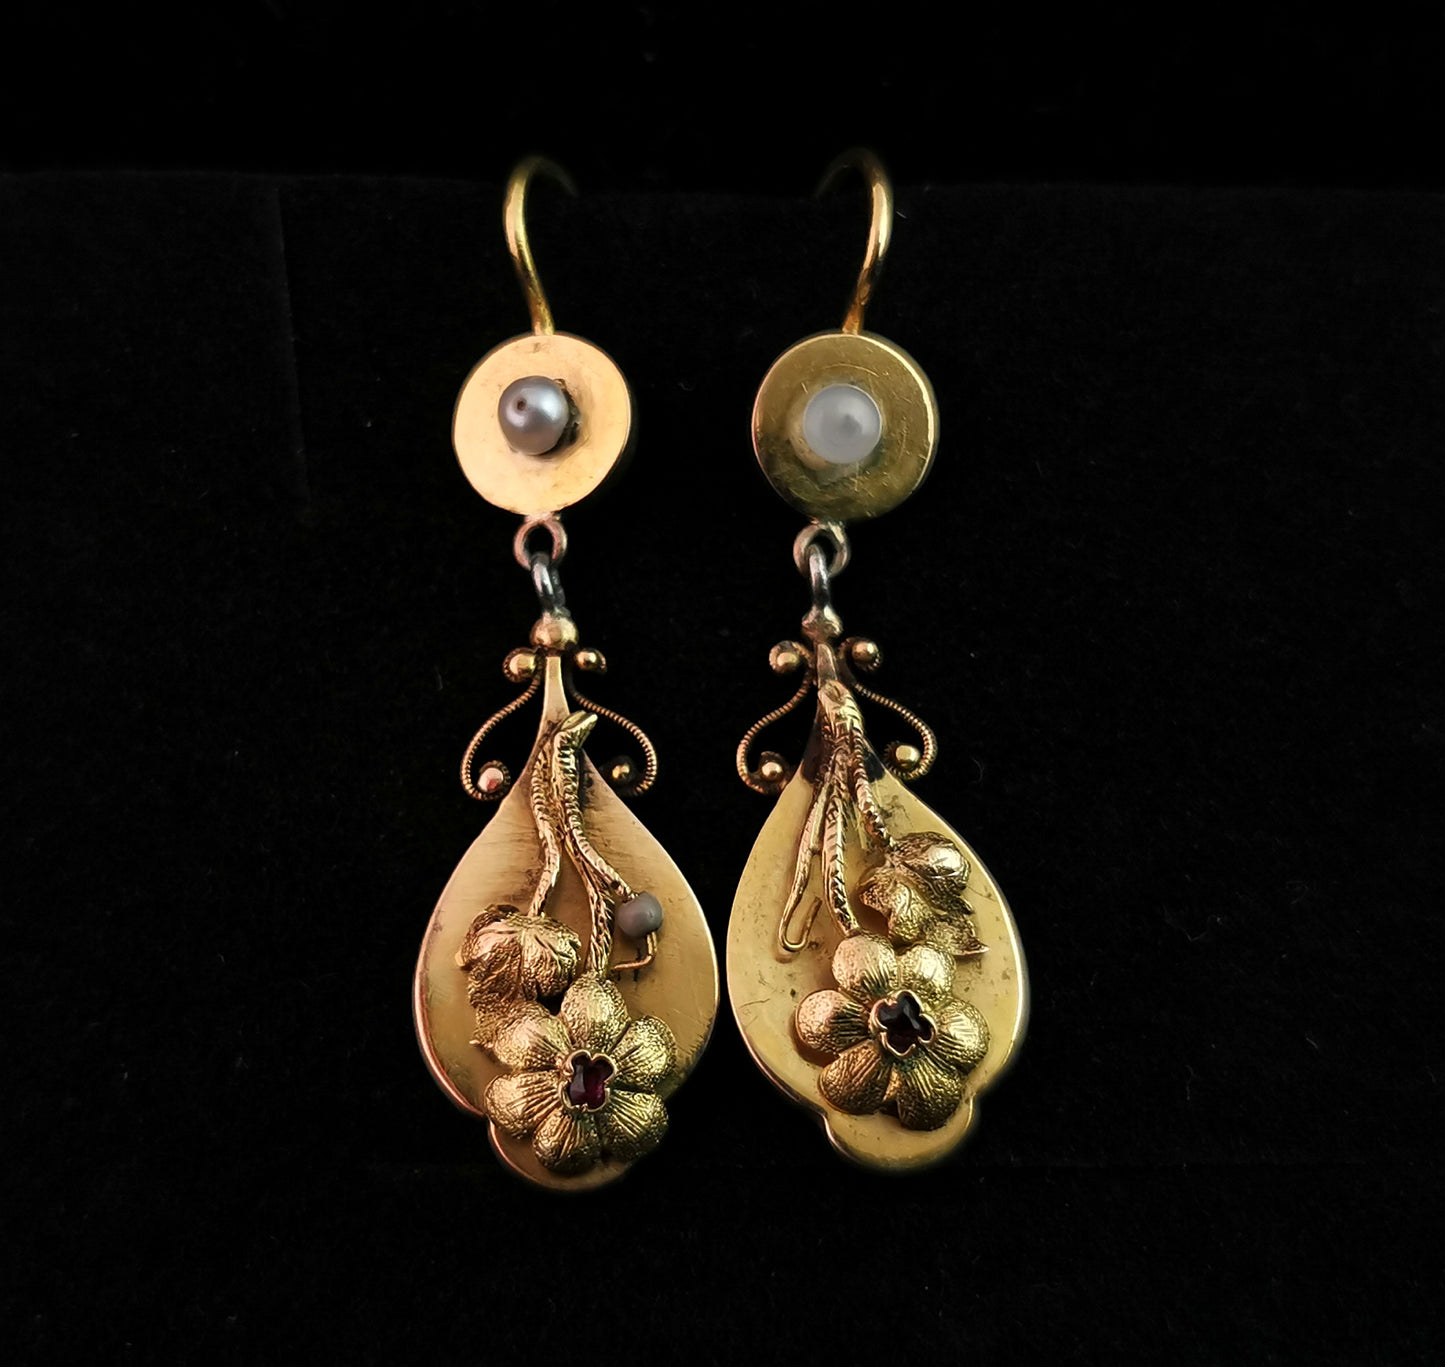 Antique Georgian 18ct gold drop earrings, Ruby, floral